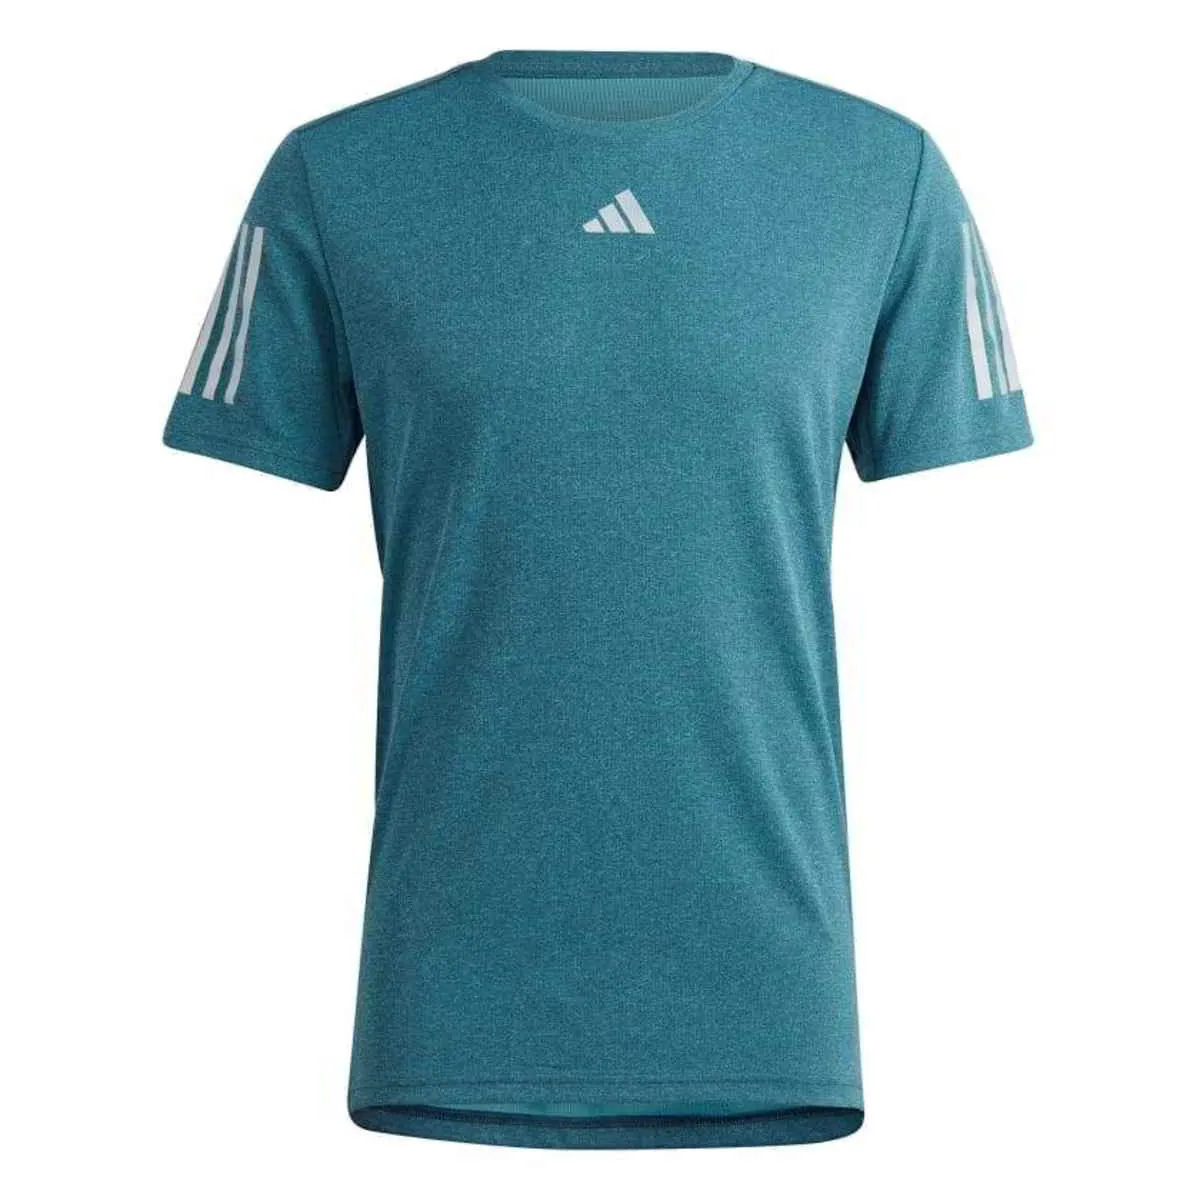 adidas short sleeve T-shirt, blue with white stripes